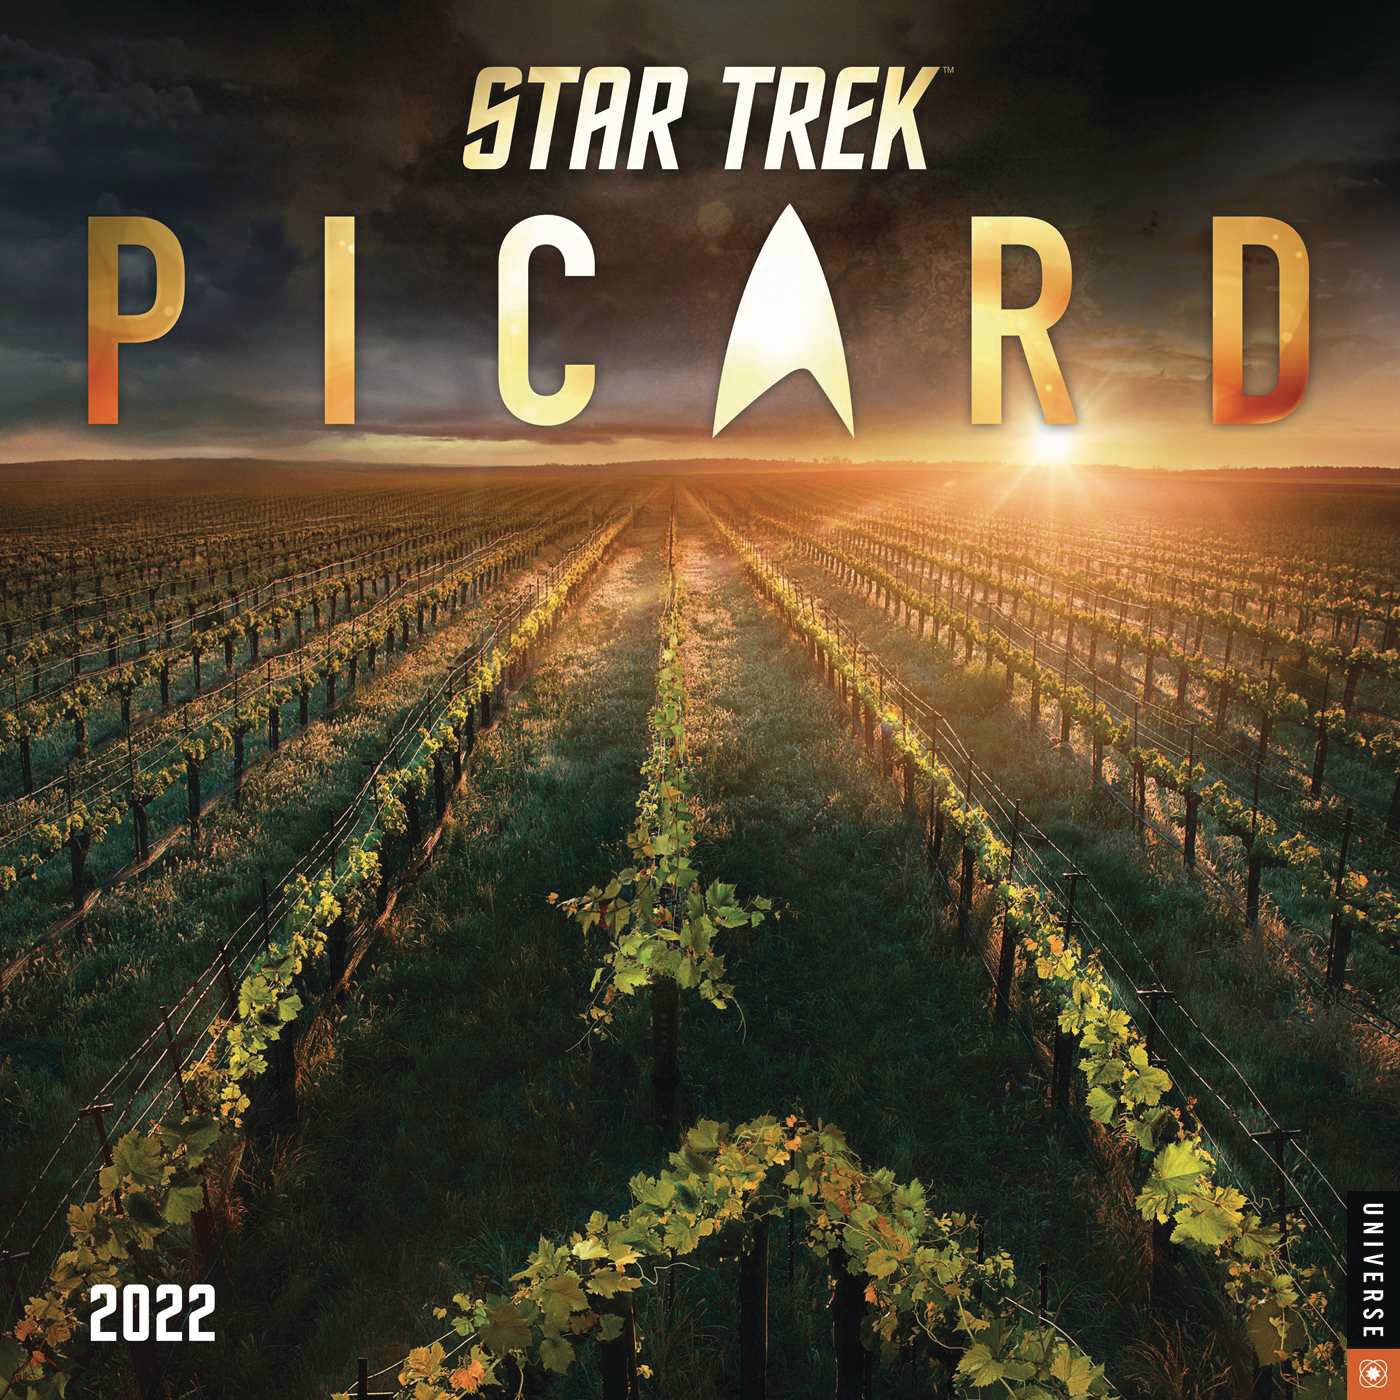 STAR TREK PICARD 2022 WALL CALENDAR